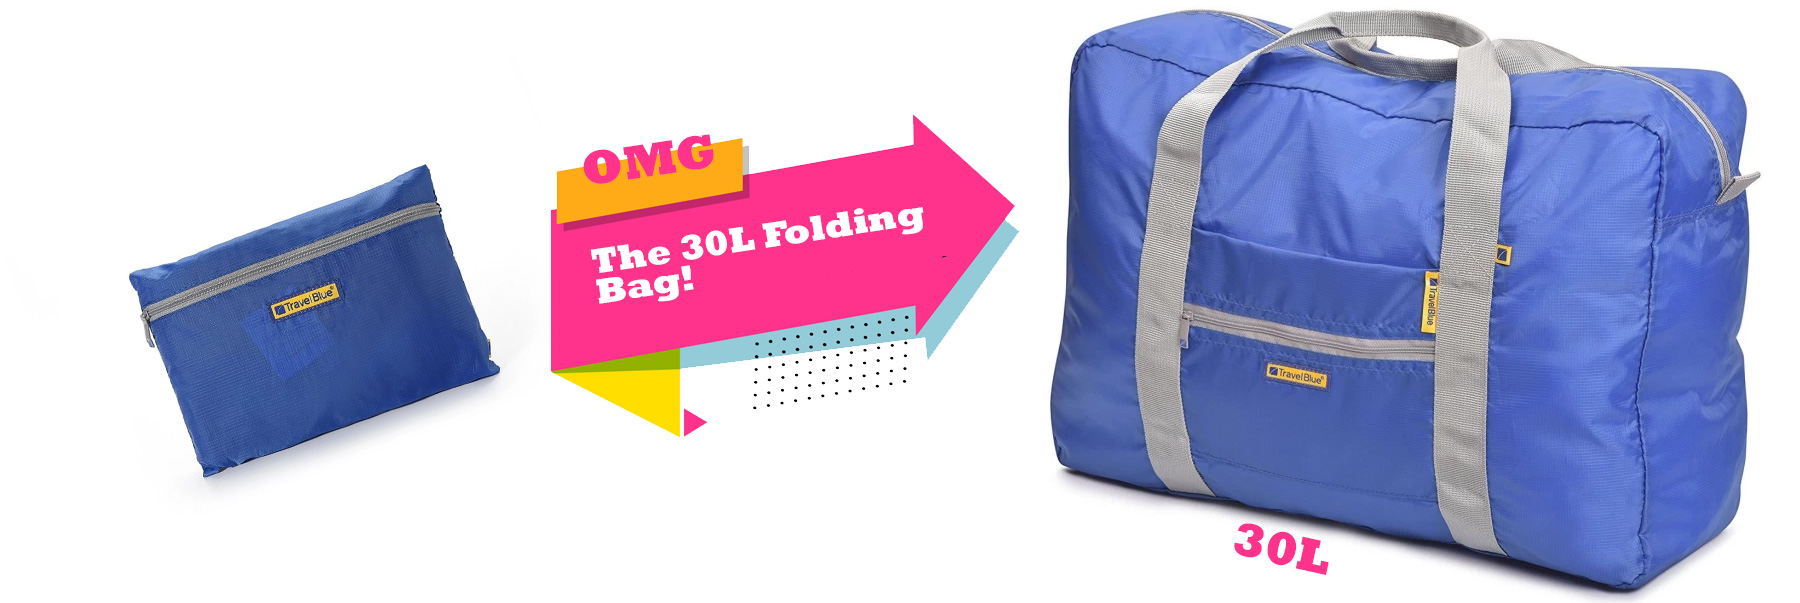 folding bag giveaway